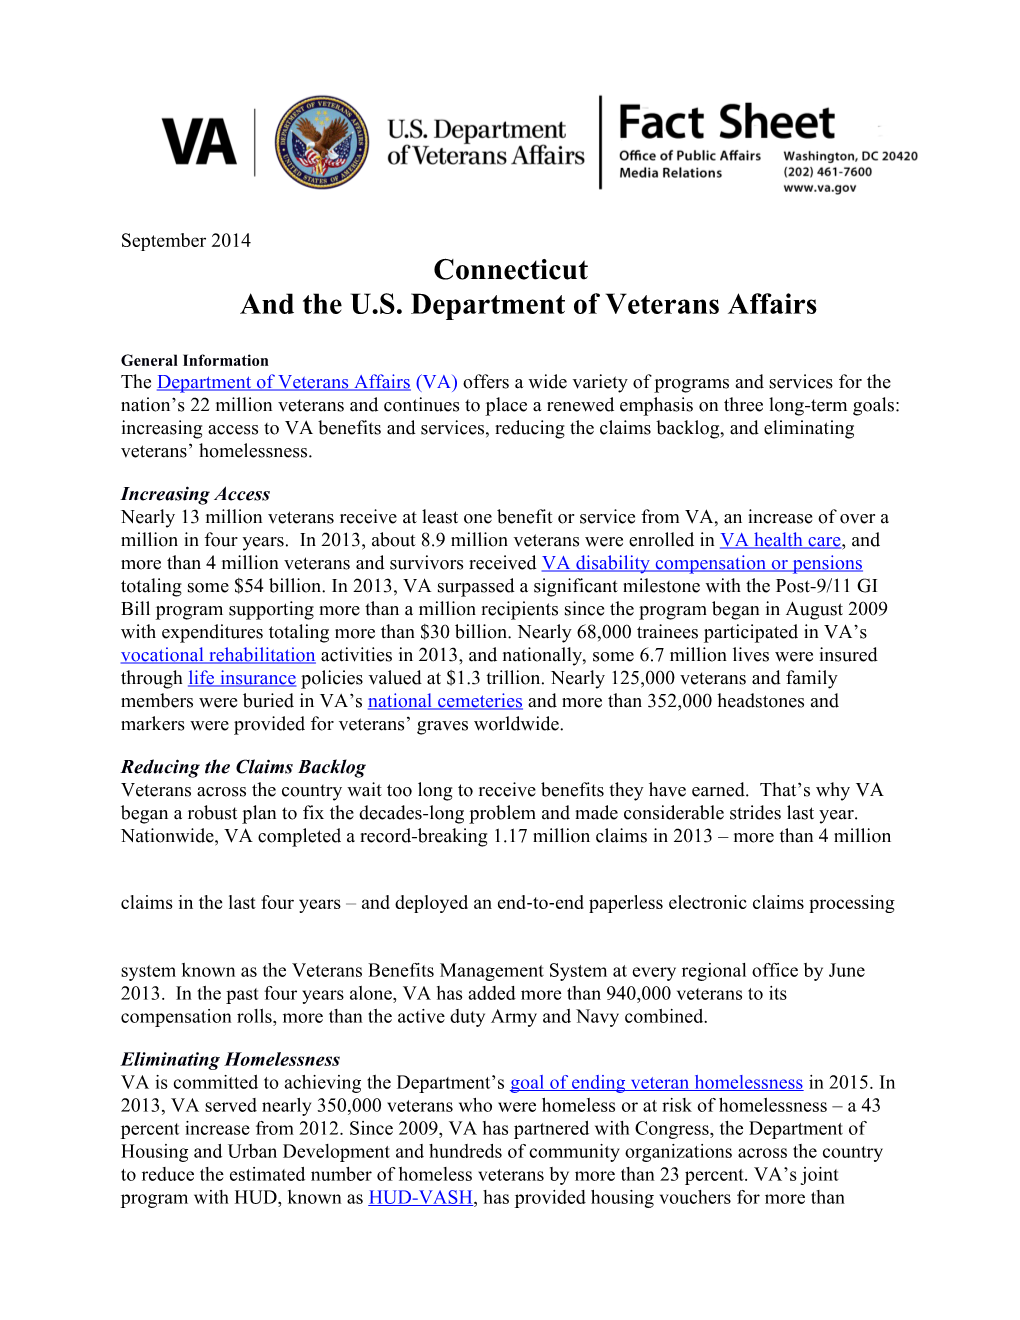 Connecticutand the U.S. Department of Veterans Affairs